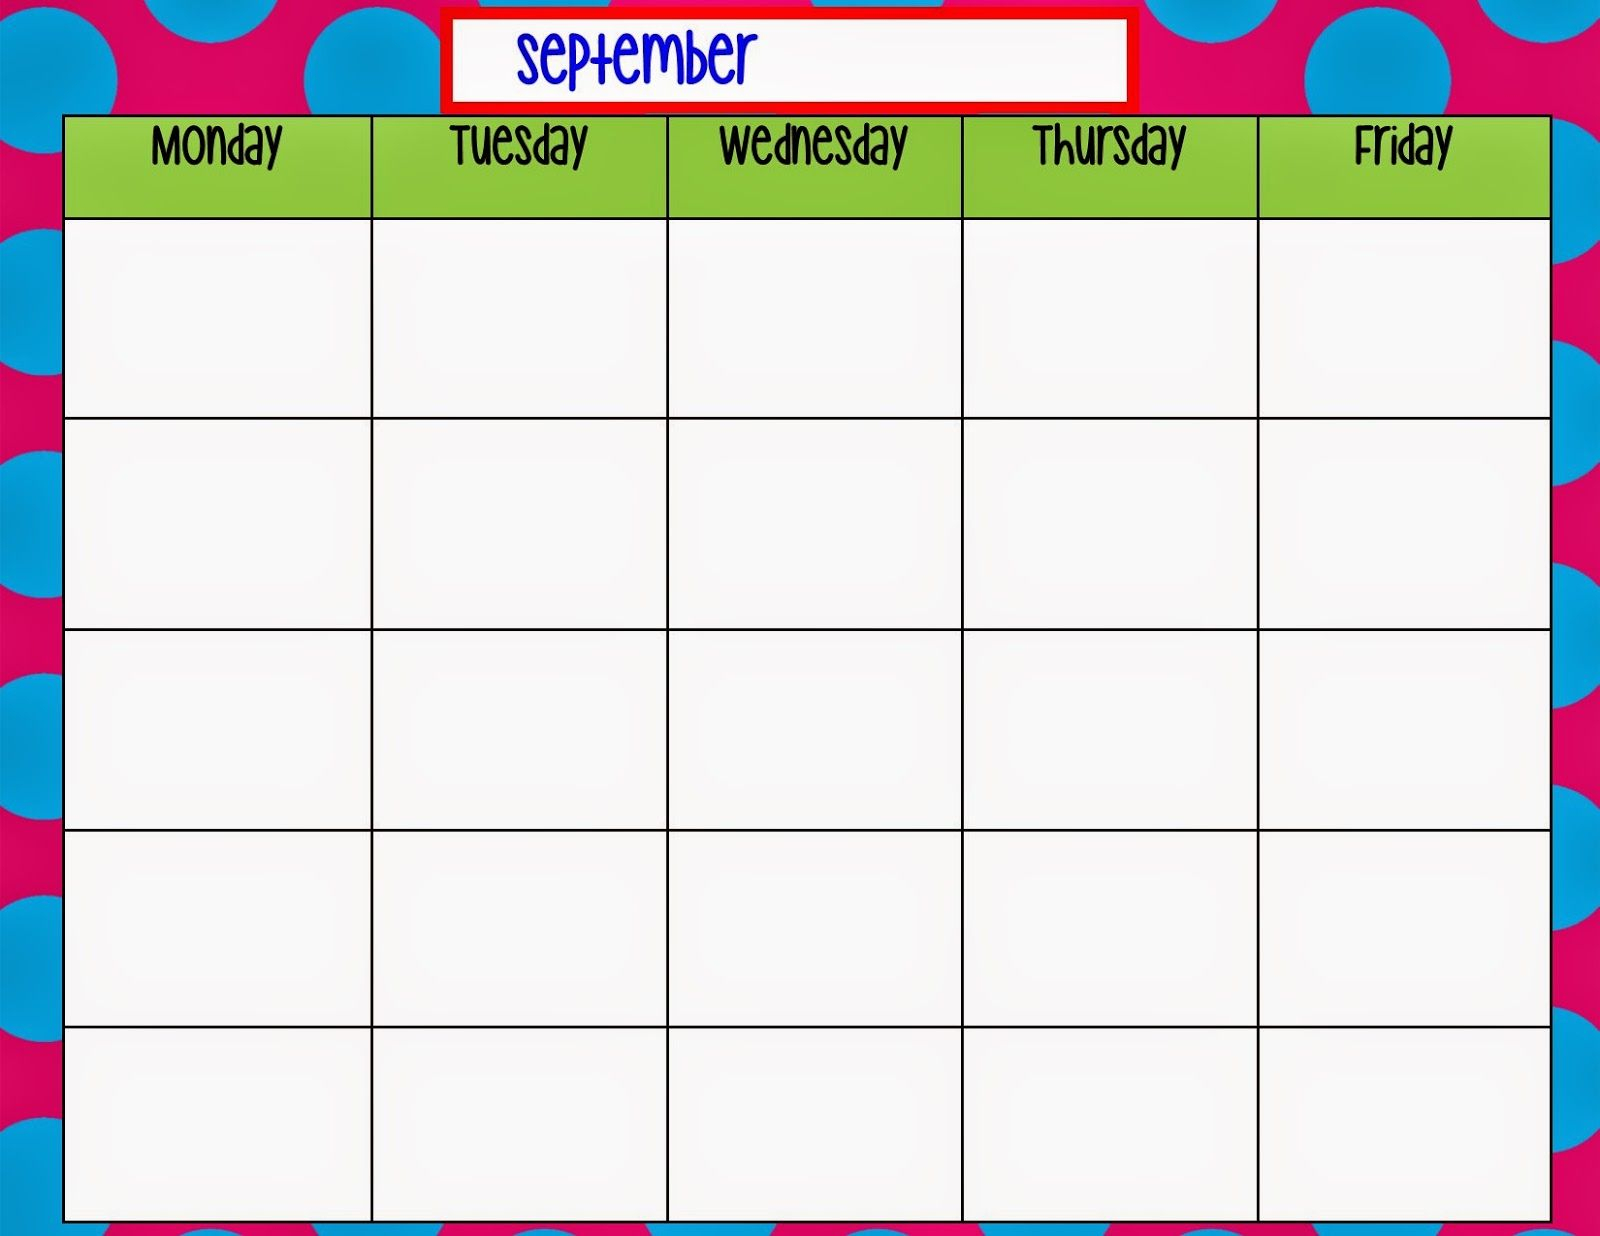 Monday+Through+Friday+Calendar+Template | Weekly Calendar throughout Calendar Template Monday Through Friday